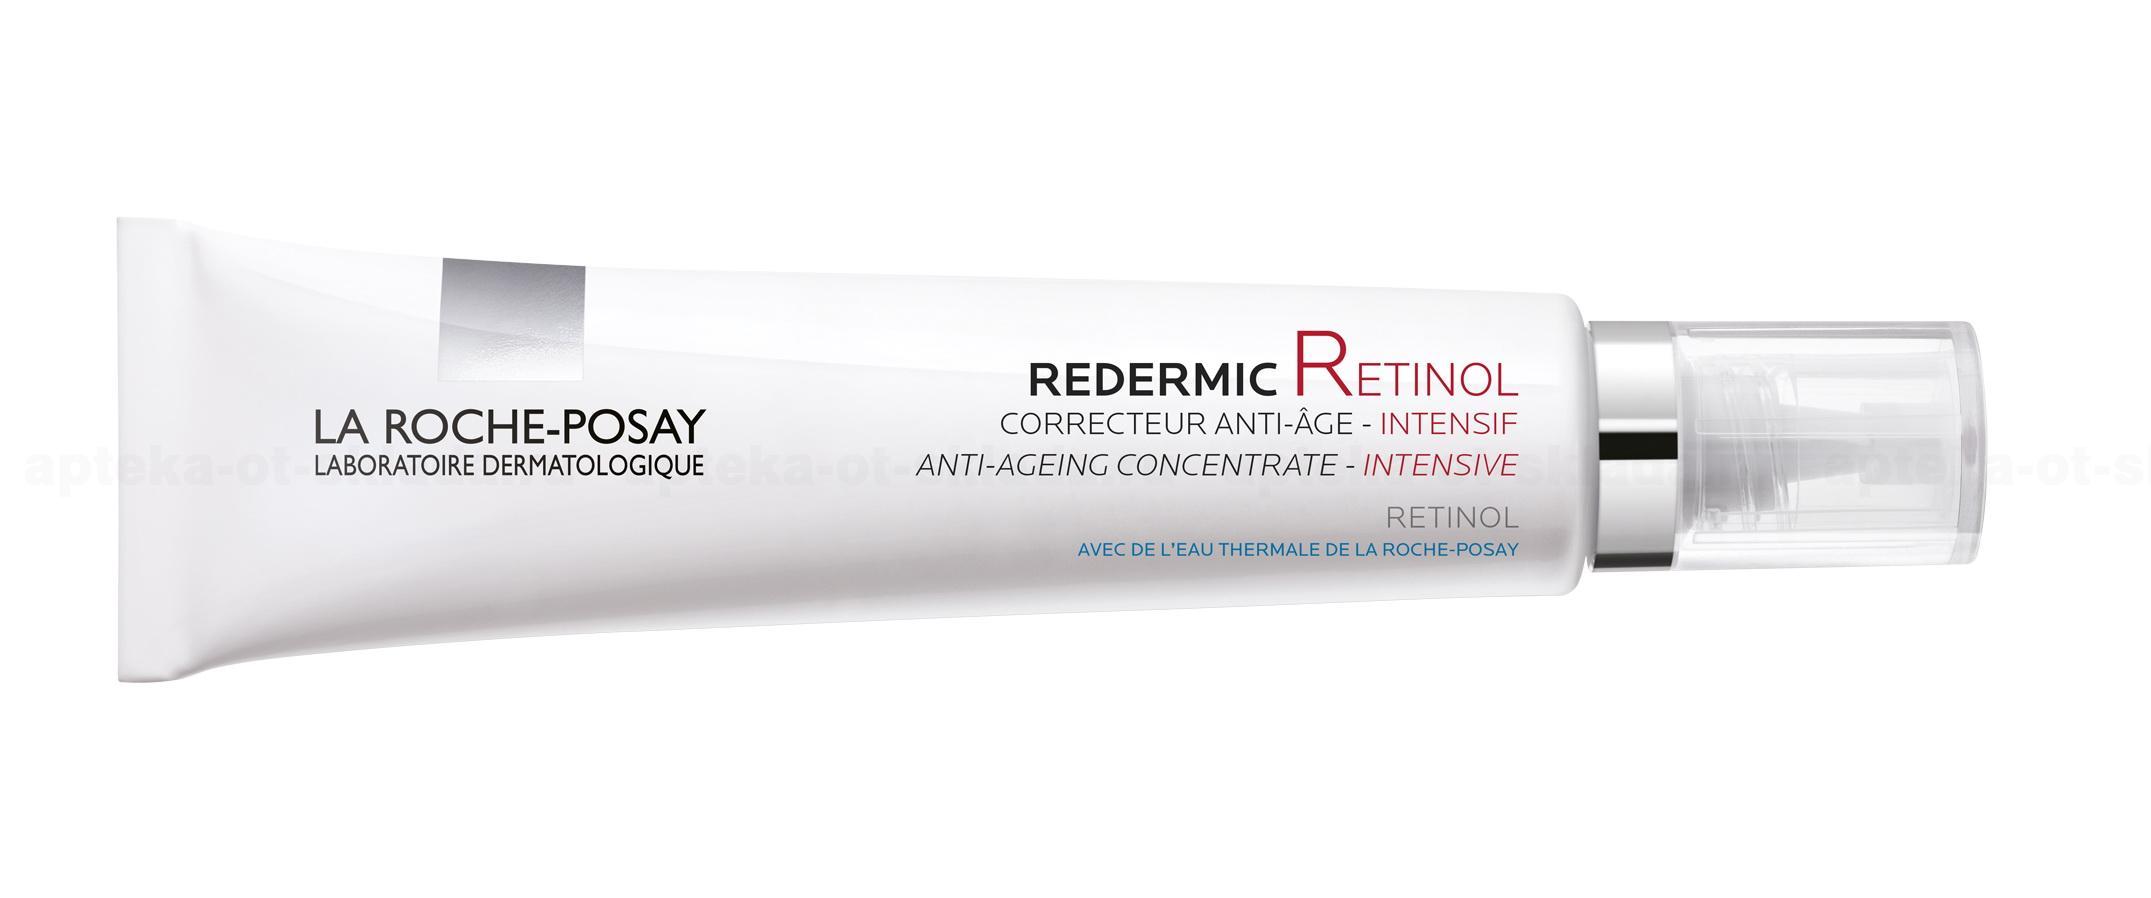 La Roche-Posay Redermic Retinol интенсивн концентрированный а/возрастной уход 30 мл